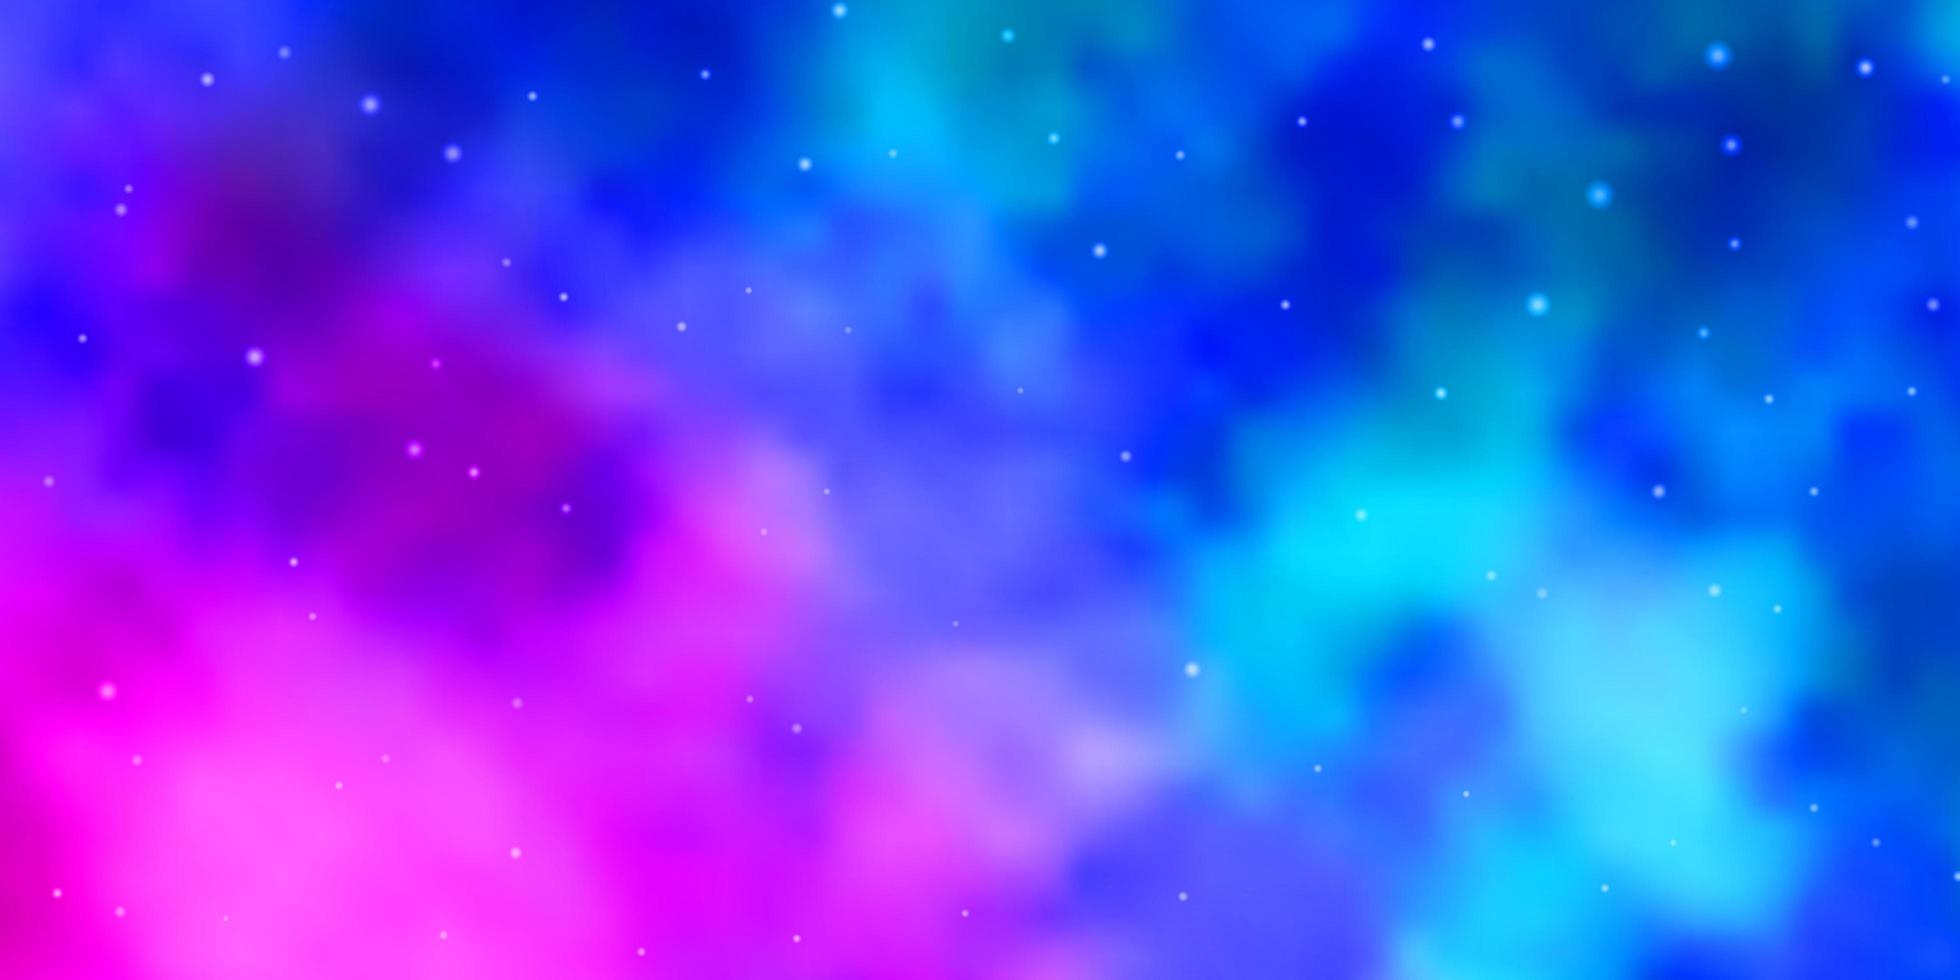 fundo vector rosa claro, azul com estrelas pequenas e grandes.